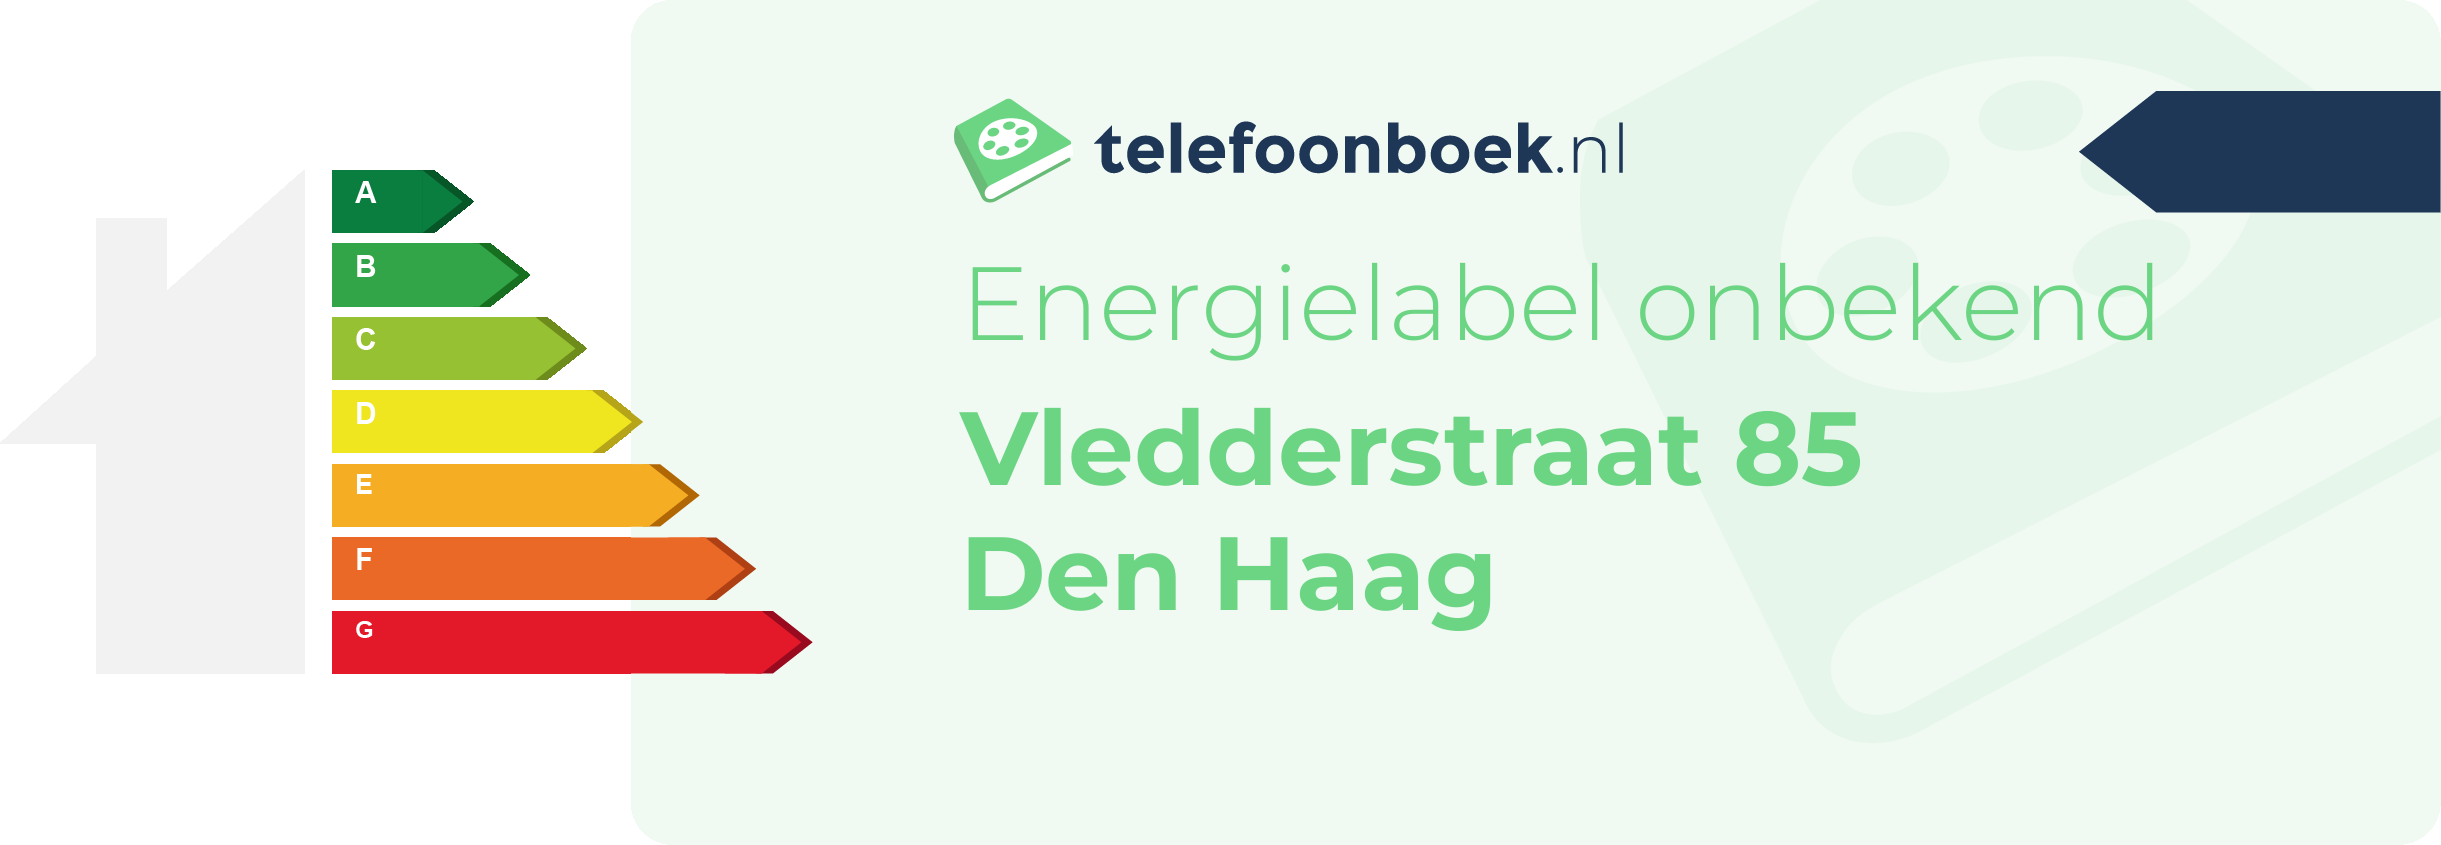 Energielabel Vledderstraat 85 Den Haag